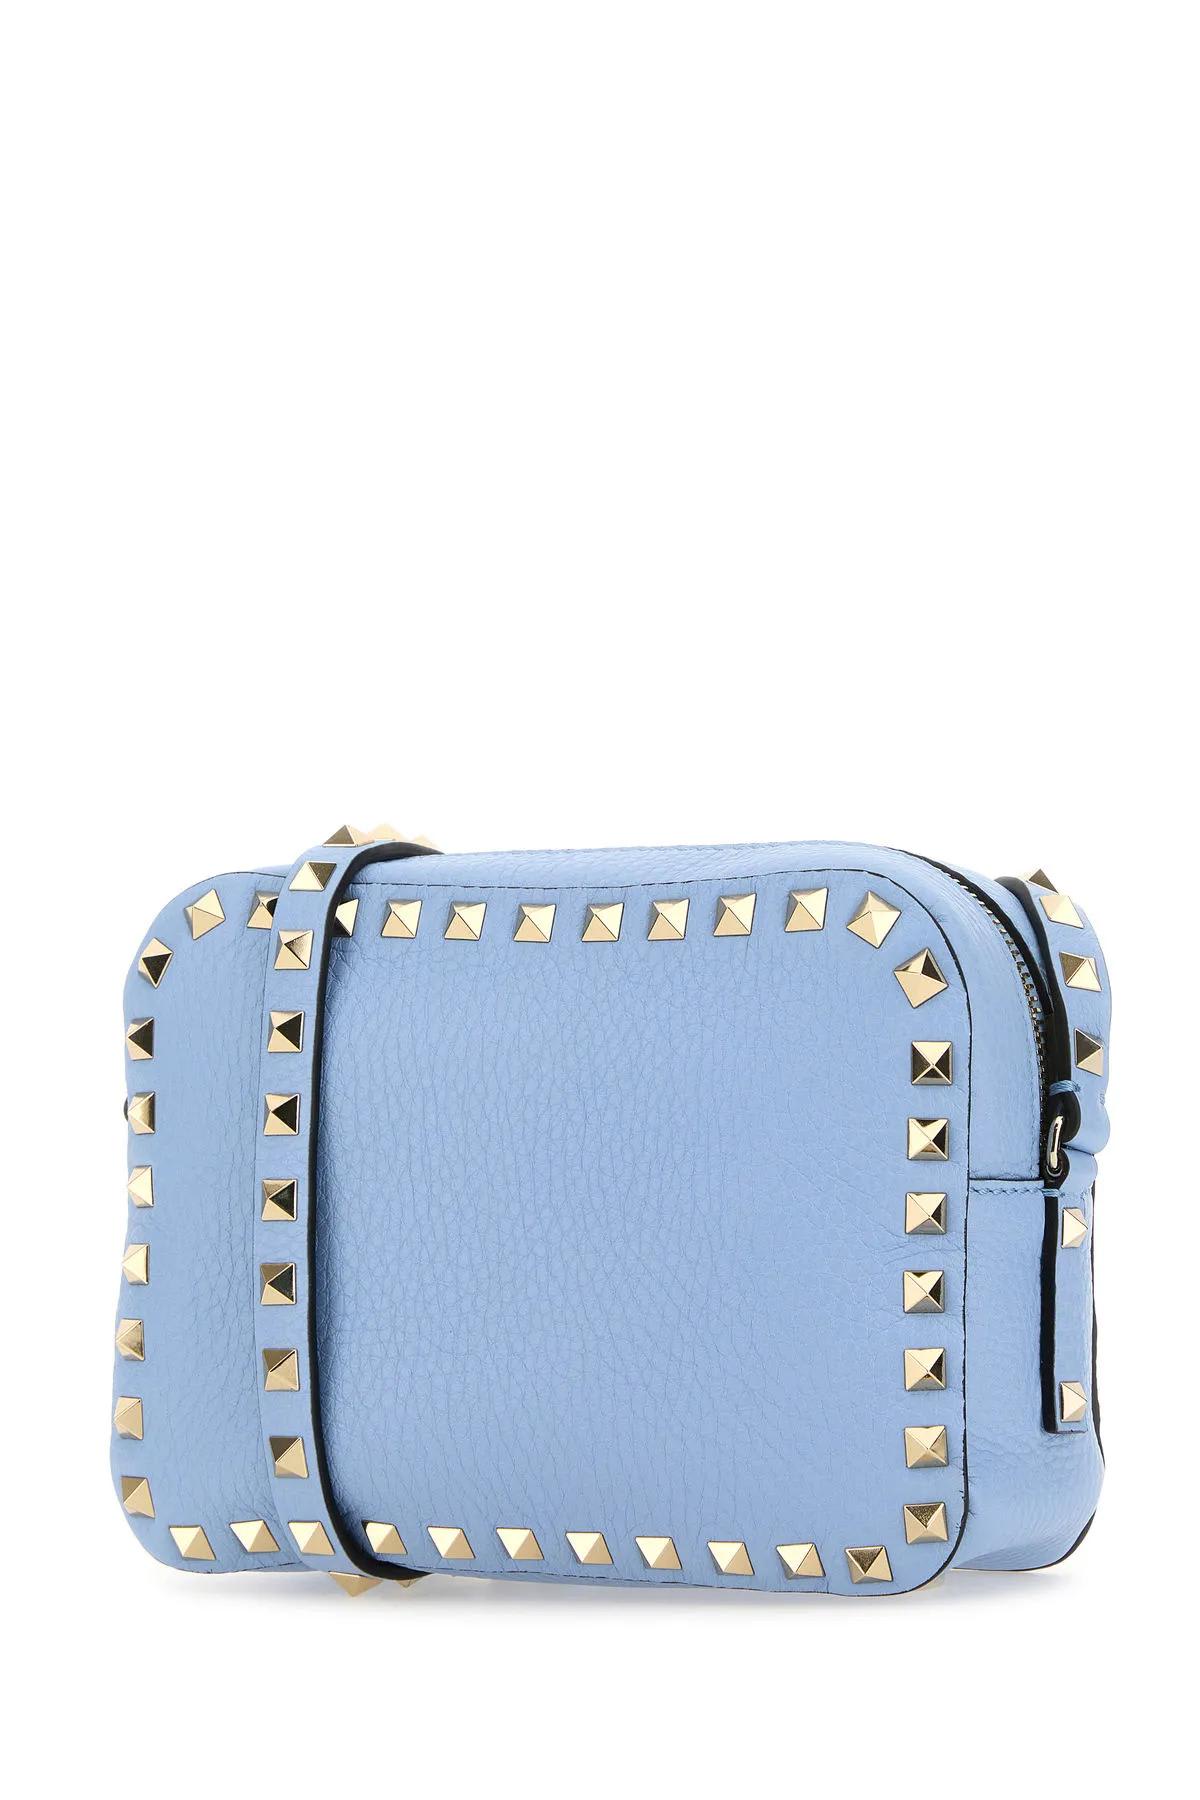 Shop Valentino Light Blue Leather Rockstud Crossbody Bag